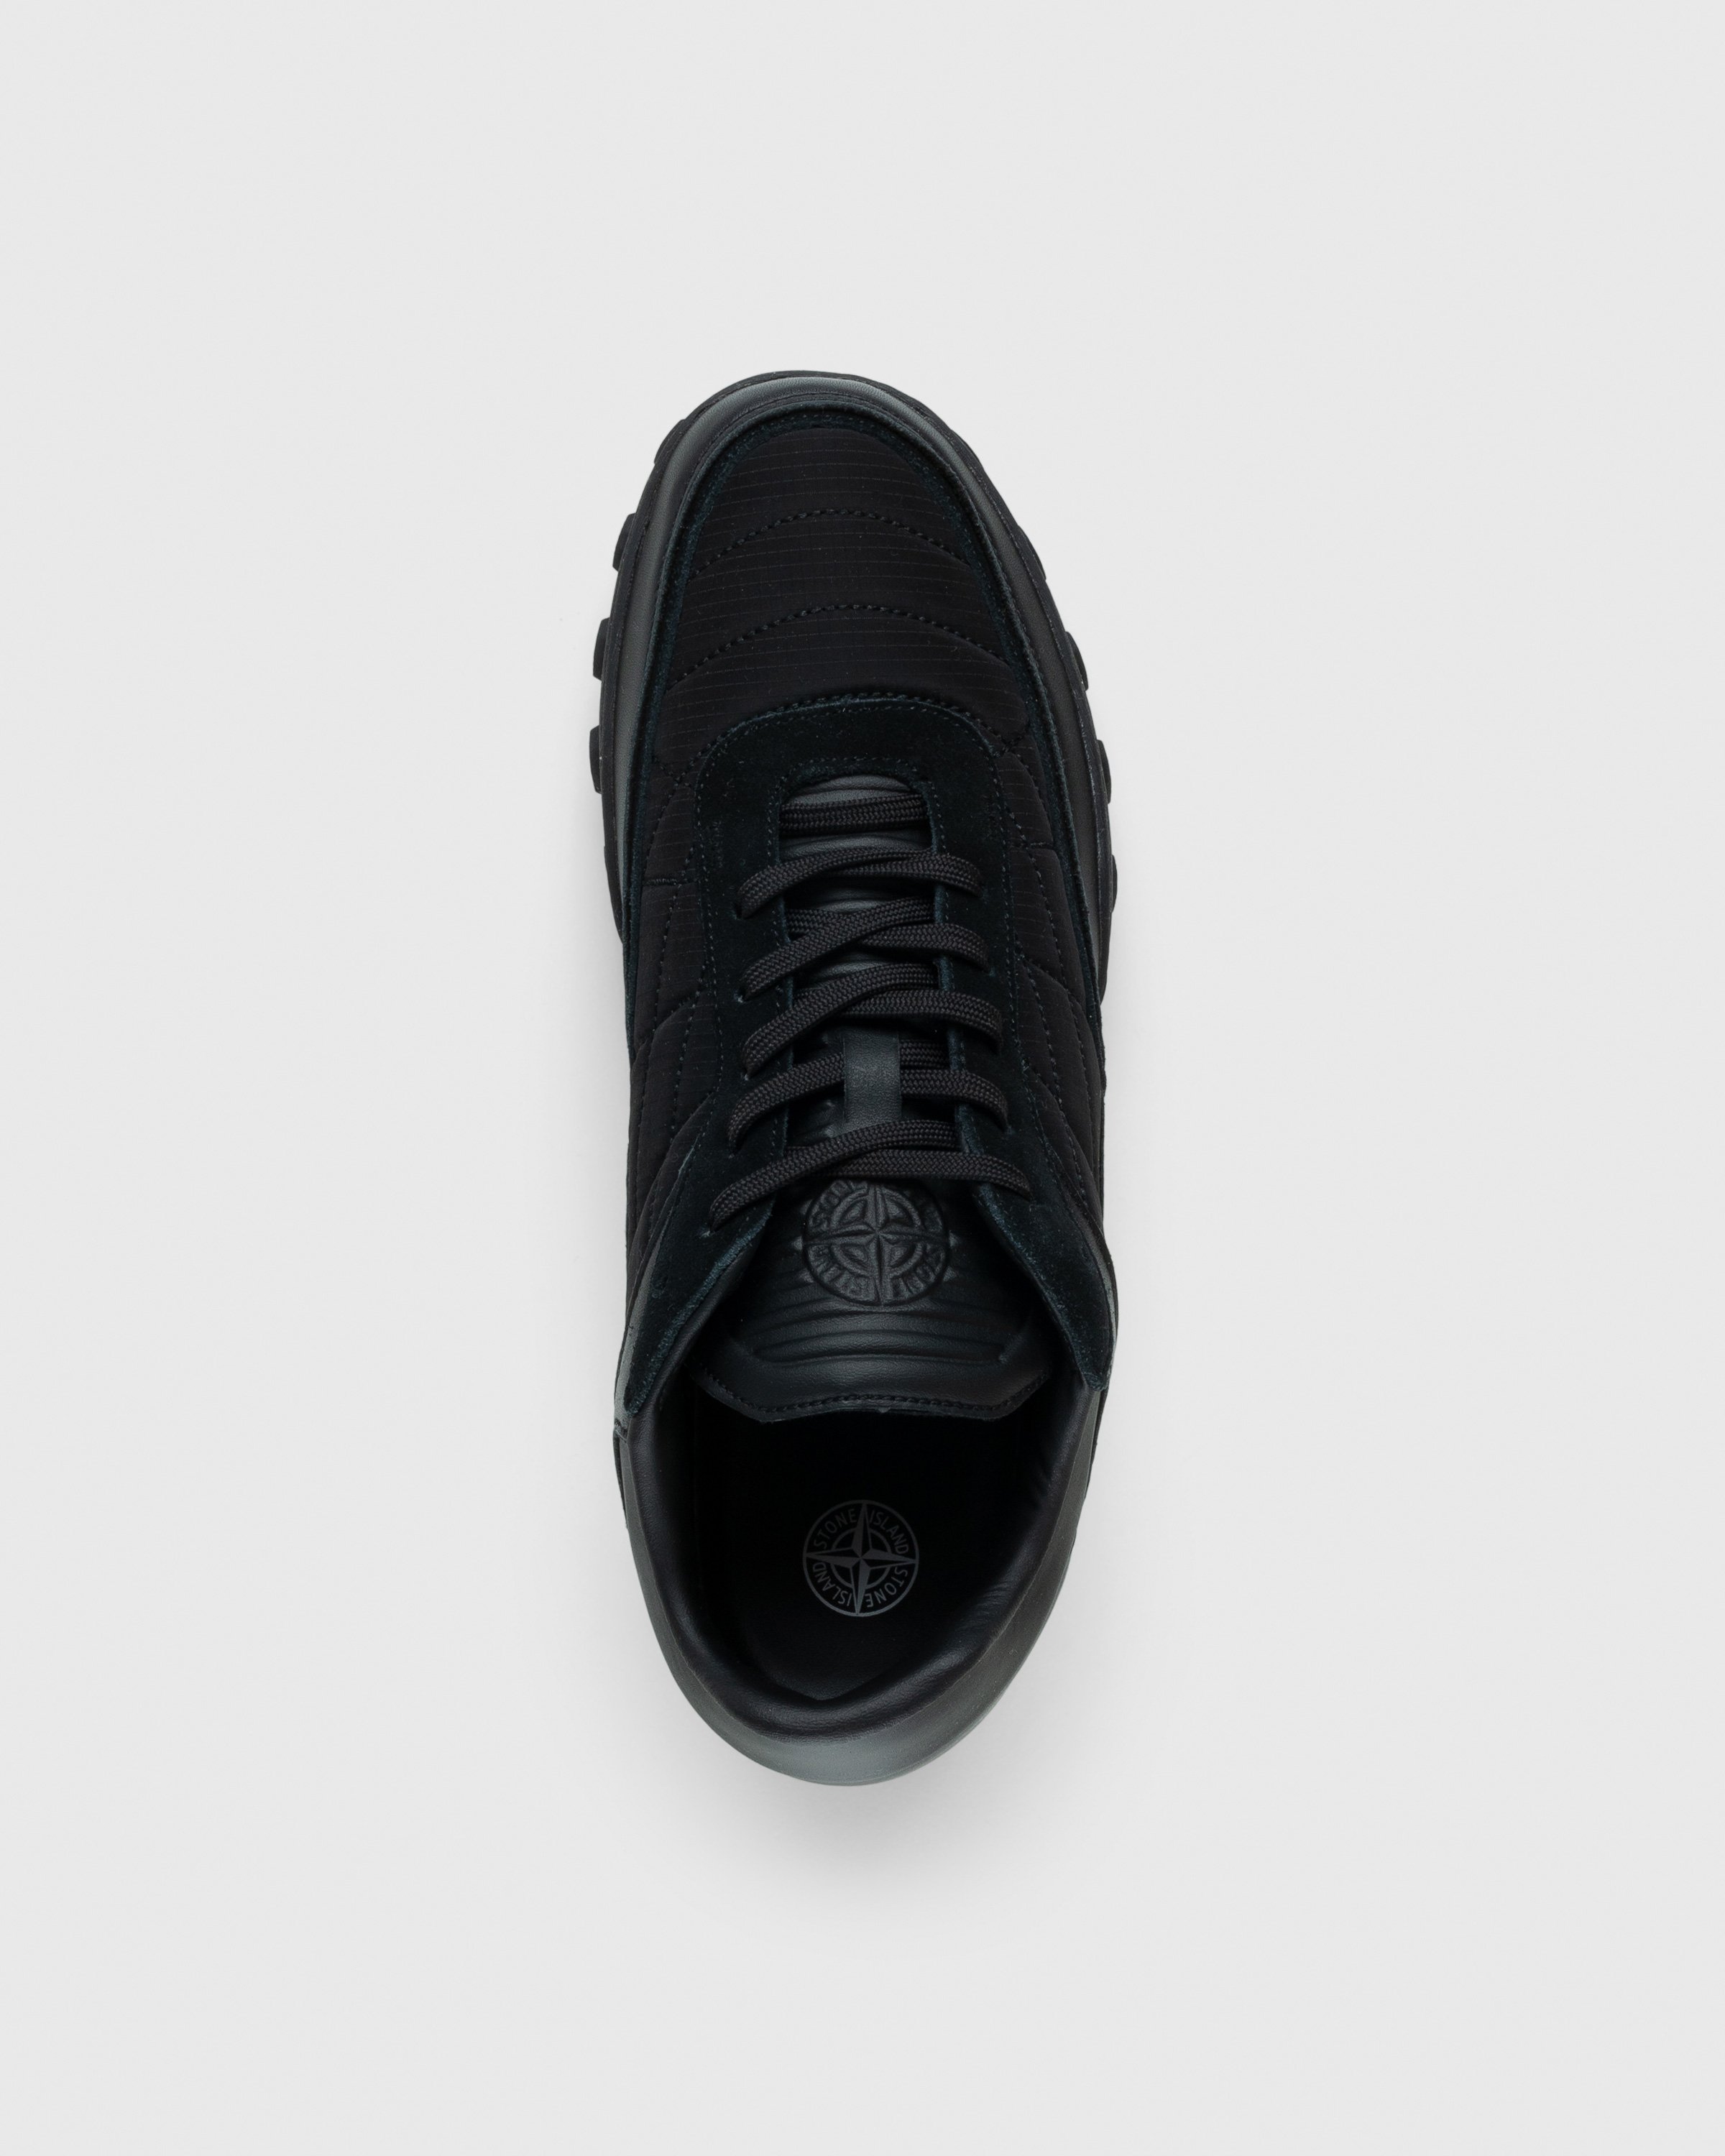 Stone Island - Football Sneaker Black - Footwear - Black - Image 5